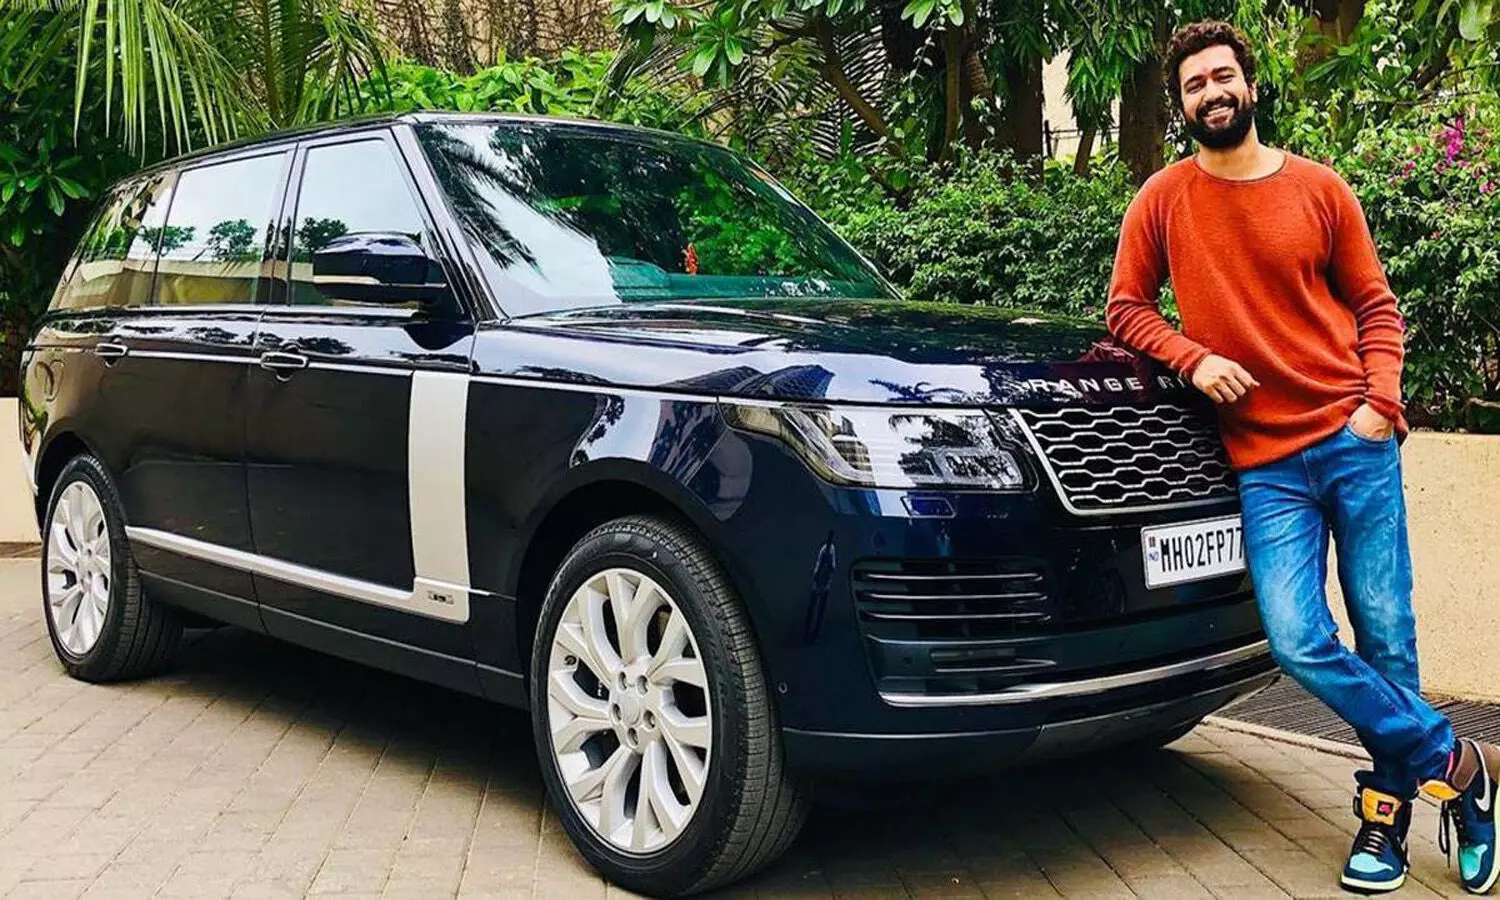 Vicky Kaushal welcomes home new luxury car worth Rs 2 crore, Aditya Dhar calls it Shotgun